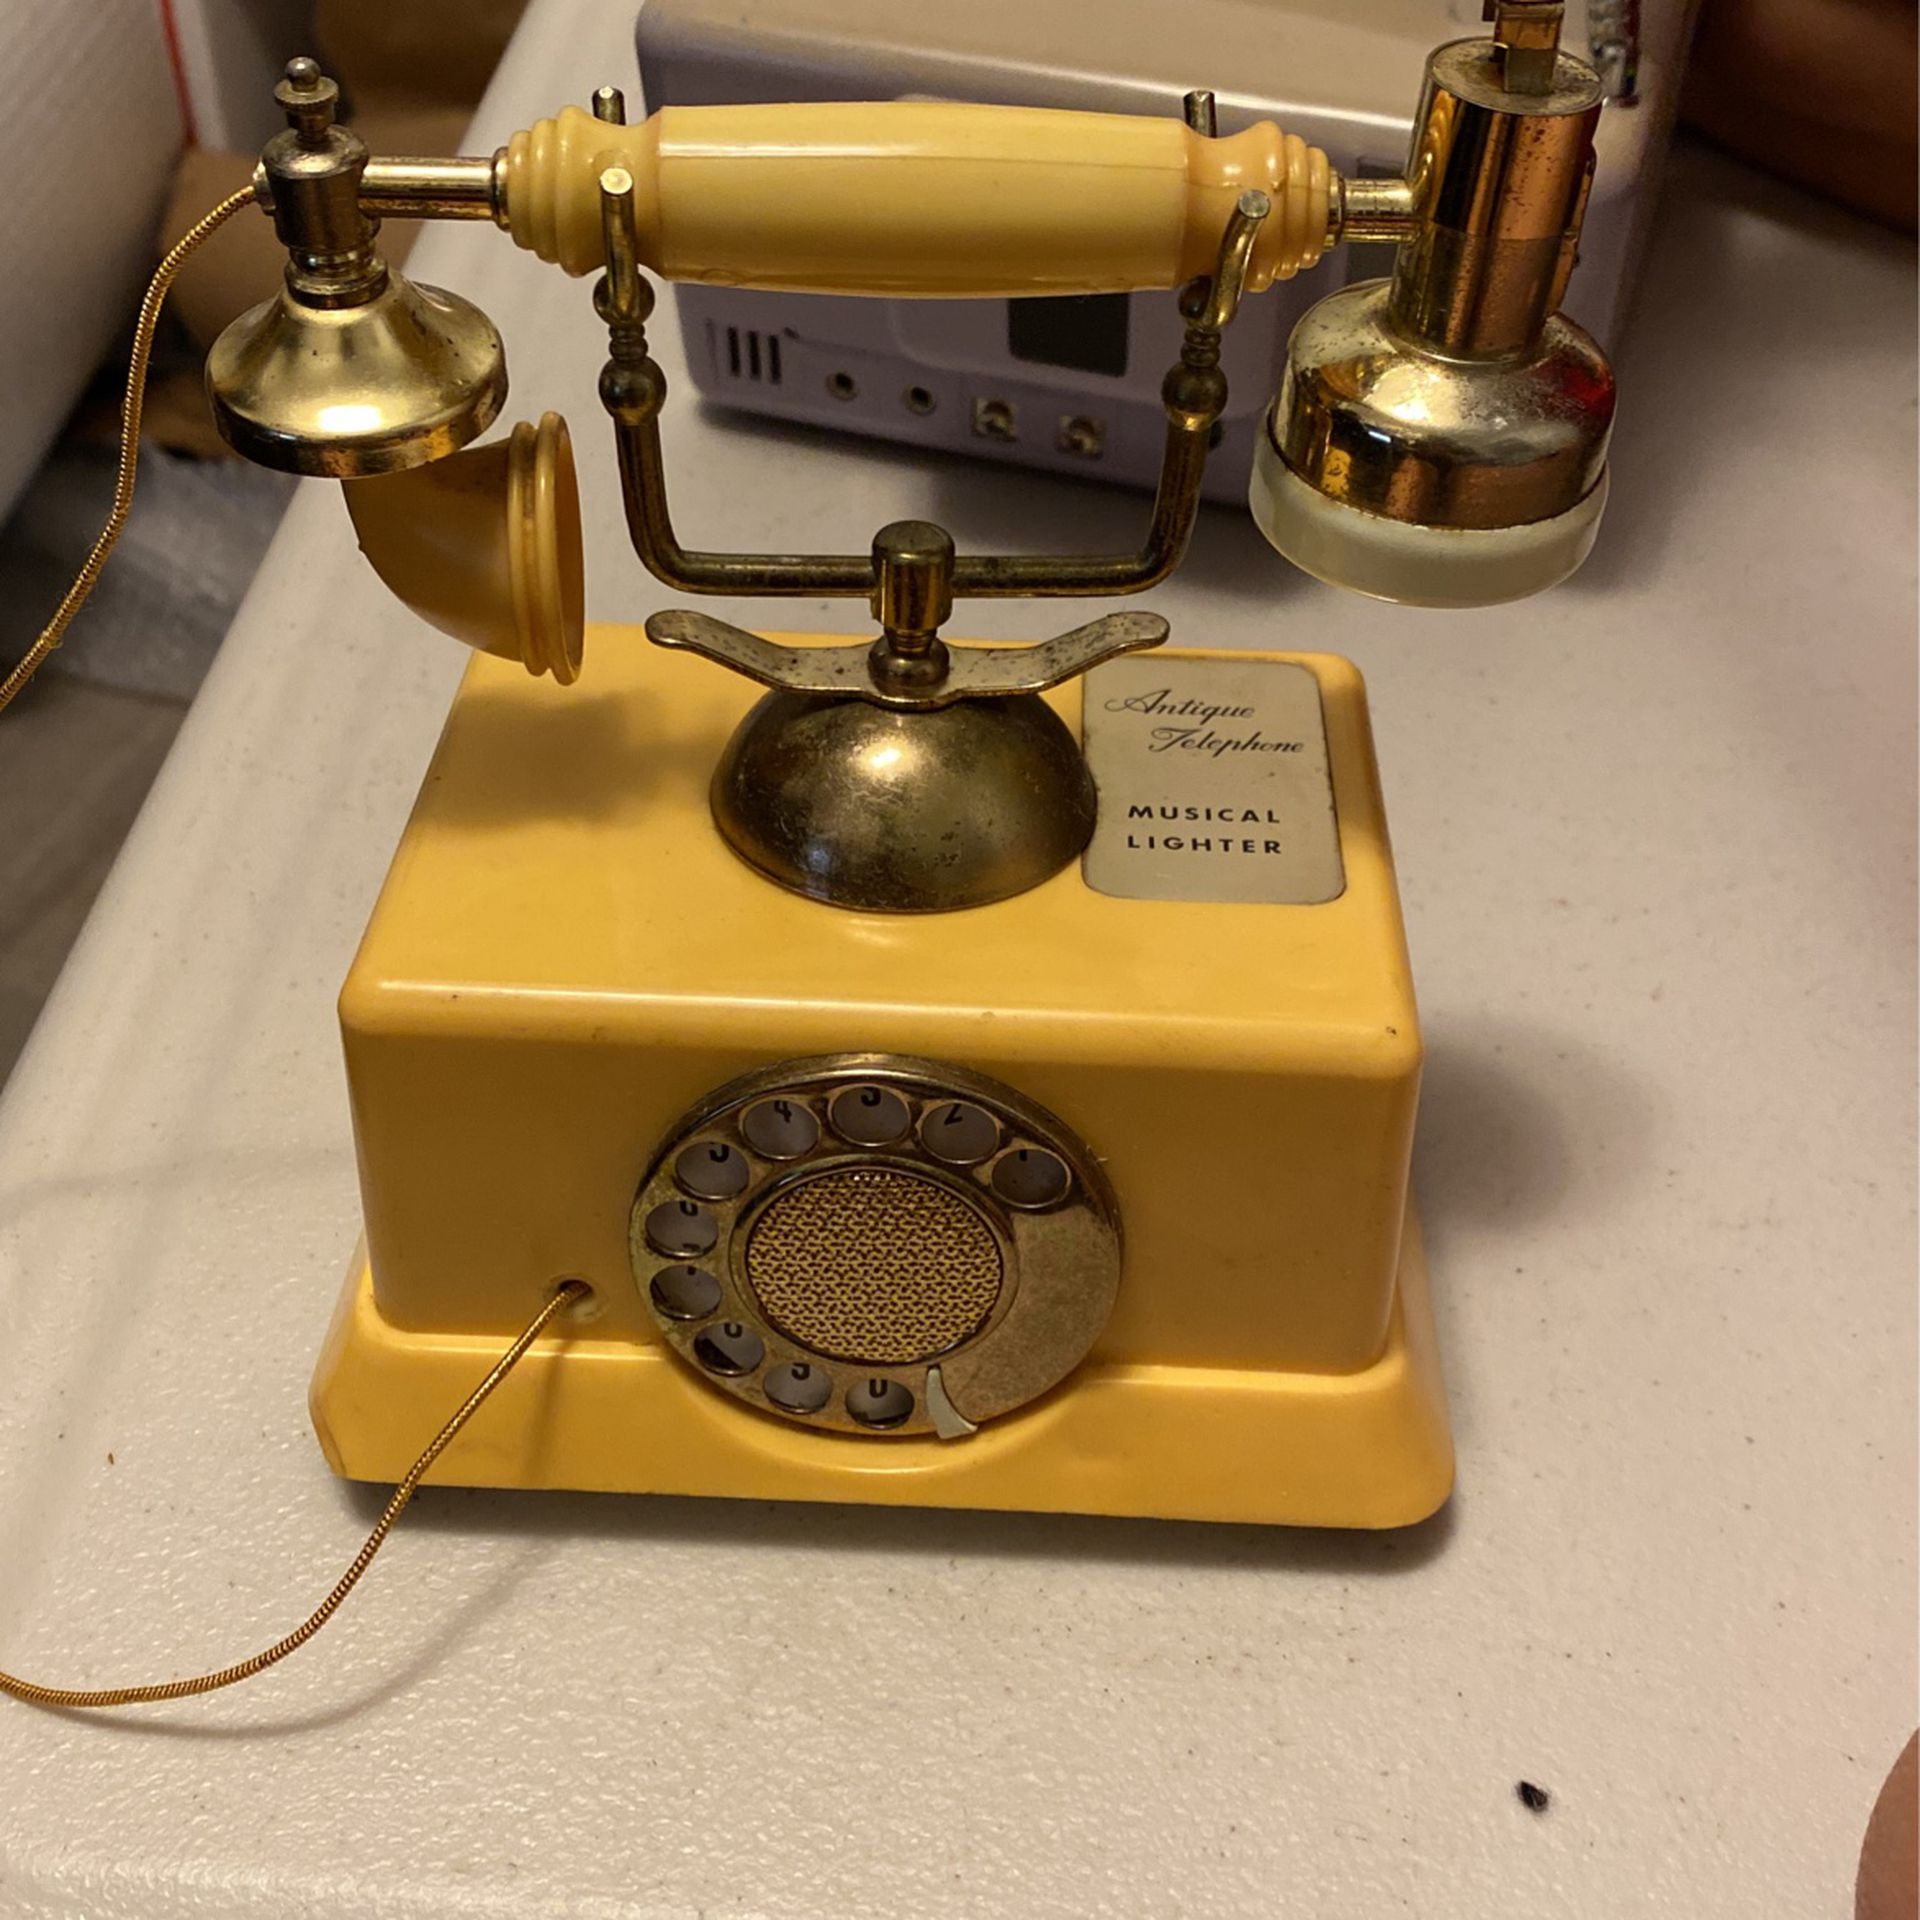 Antique telephone musical lighter